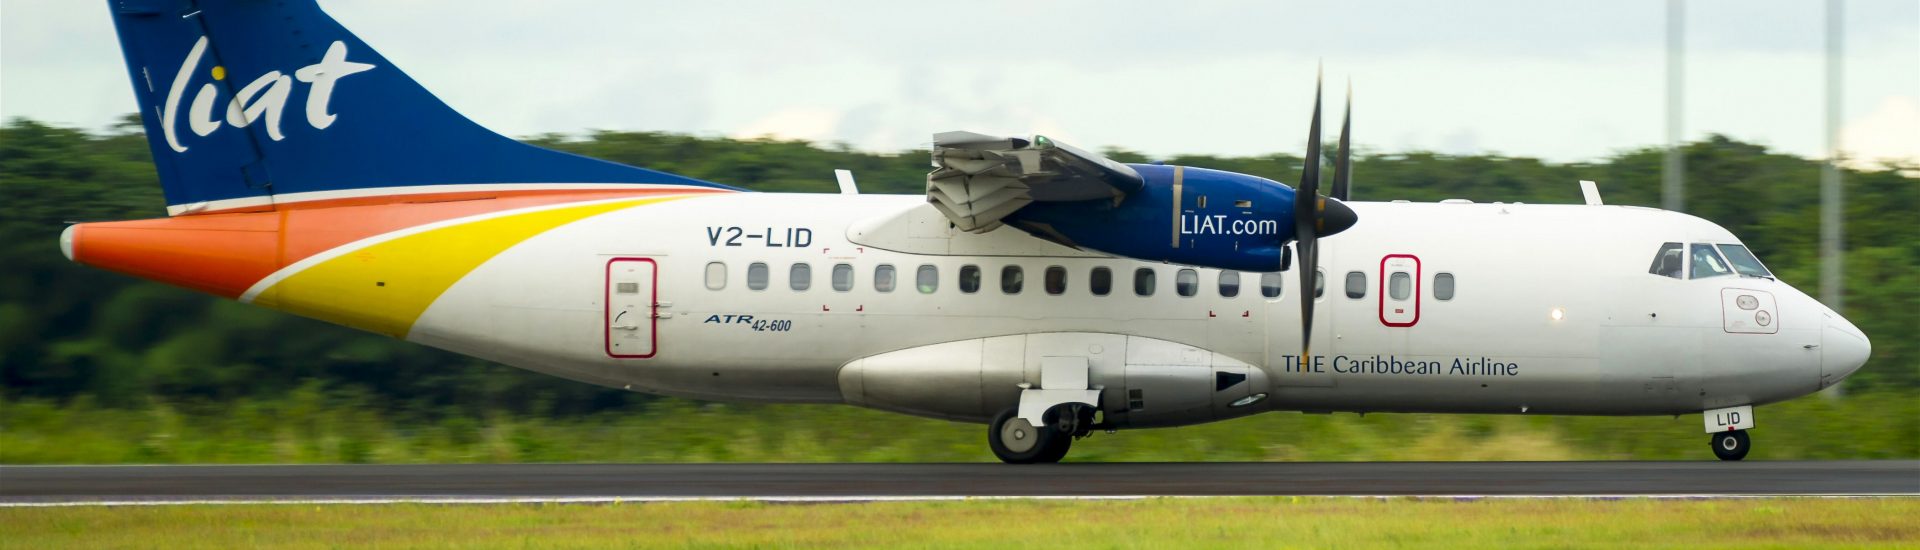 ATR42-600 LIAT V2-LID